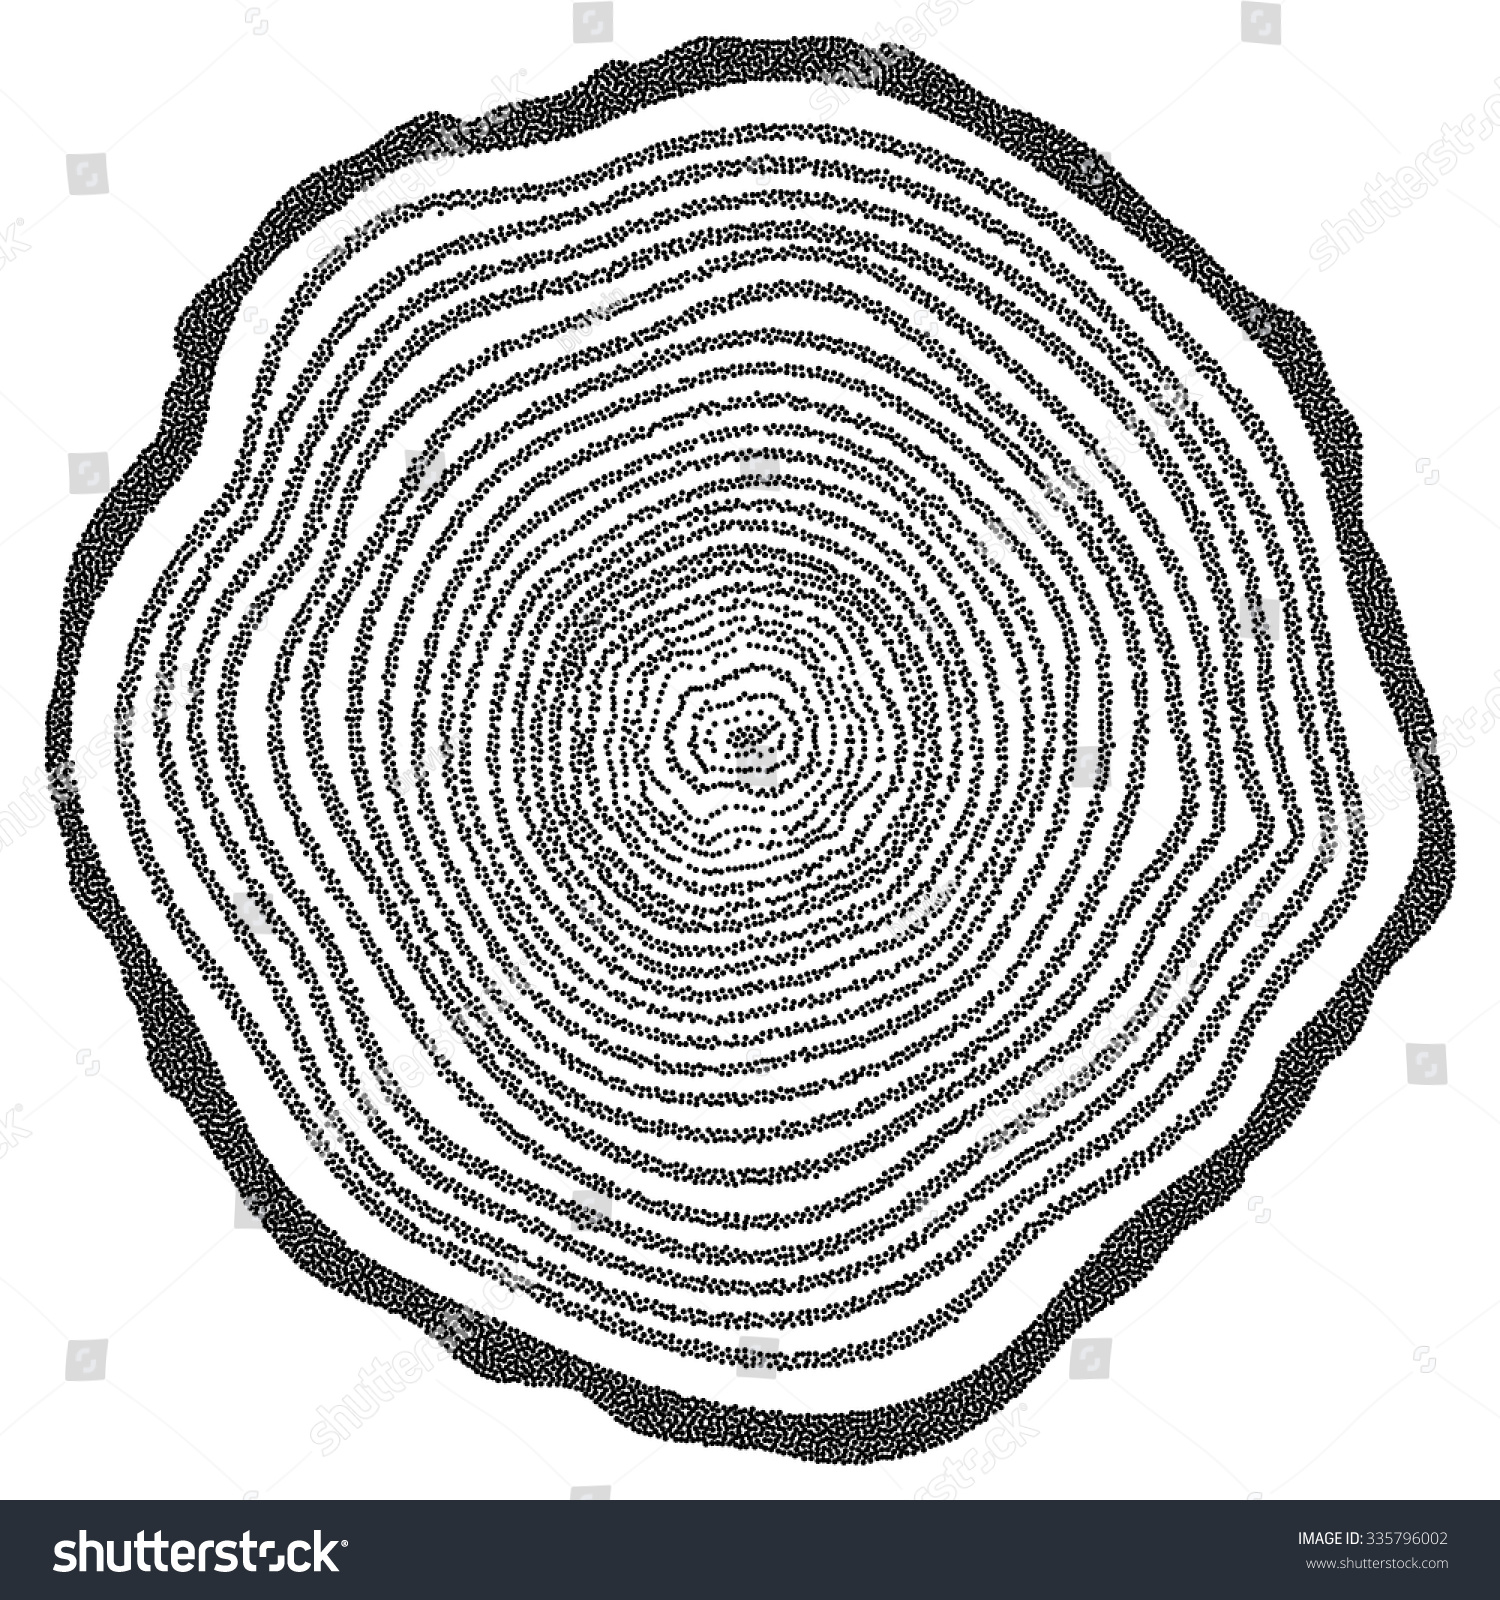 clipart tree rings - photo #28